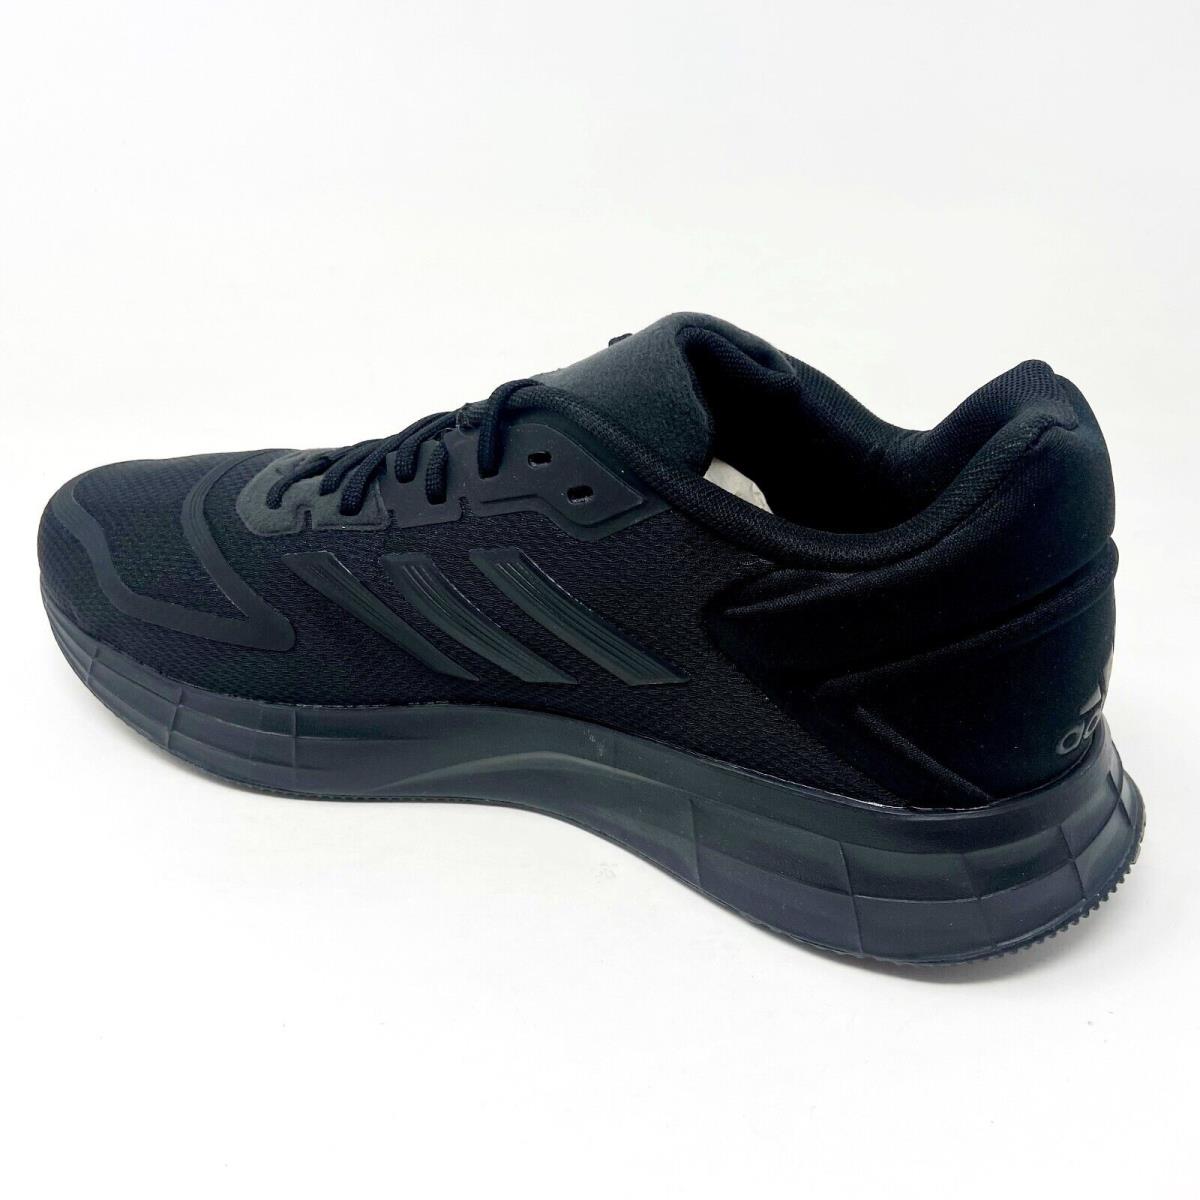 Adidas shoes Duramo - Black 1